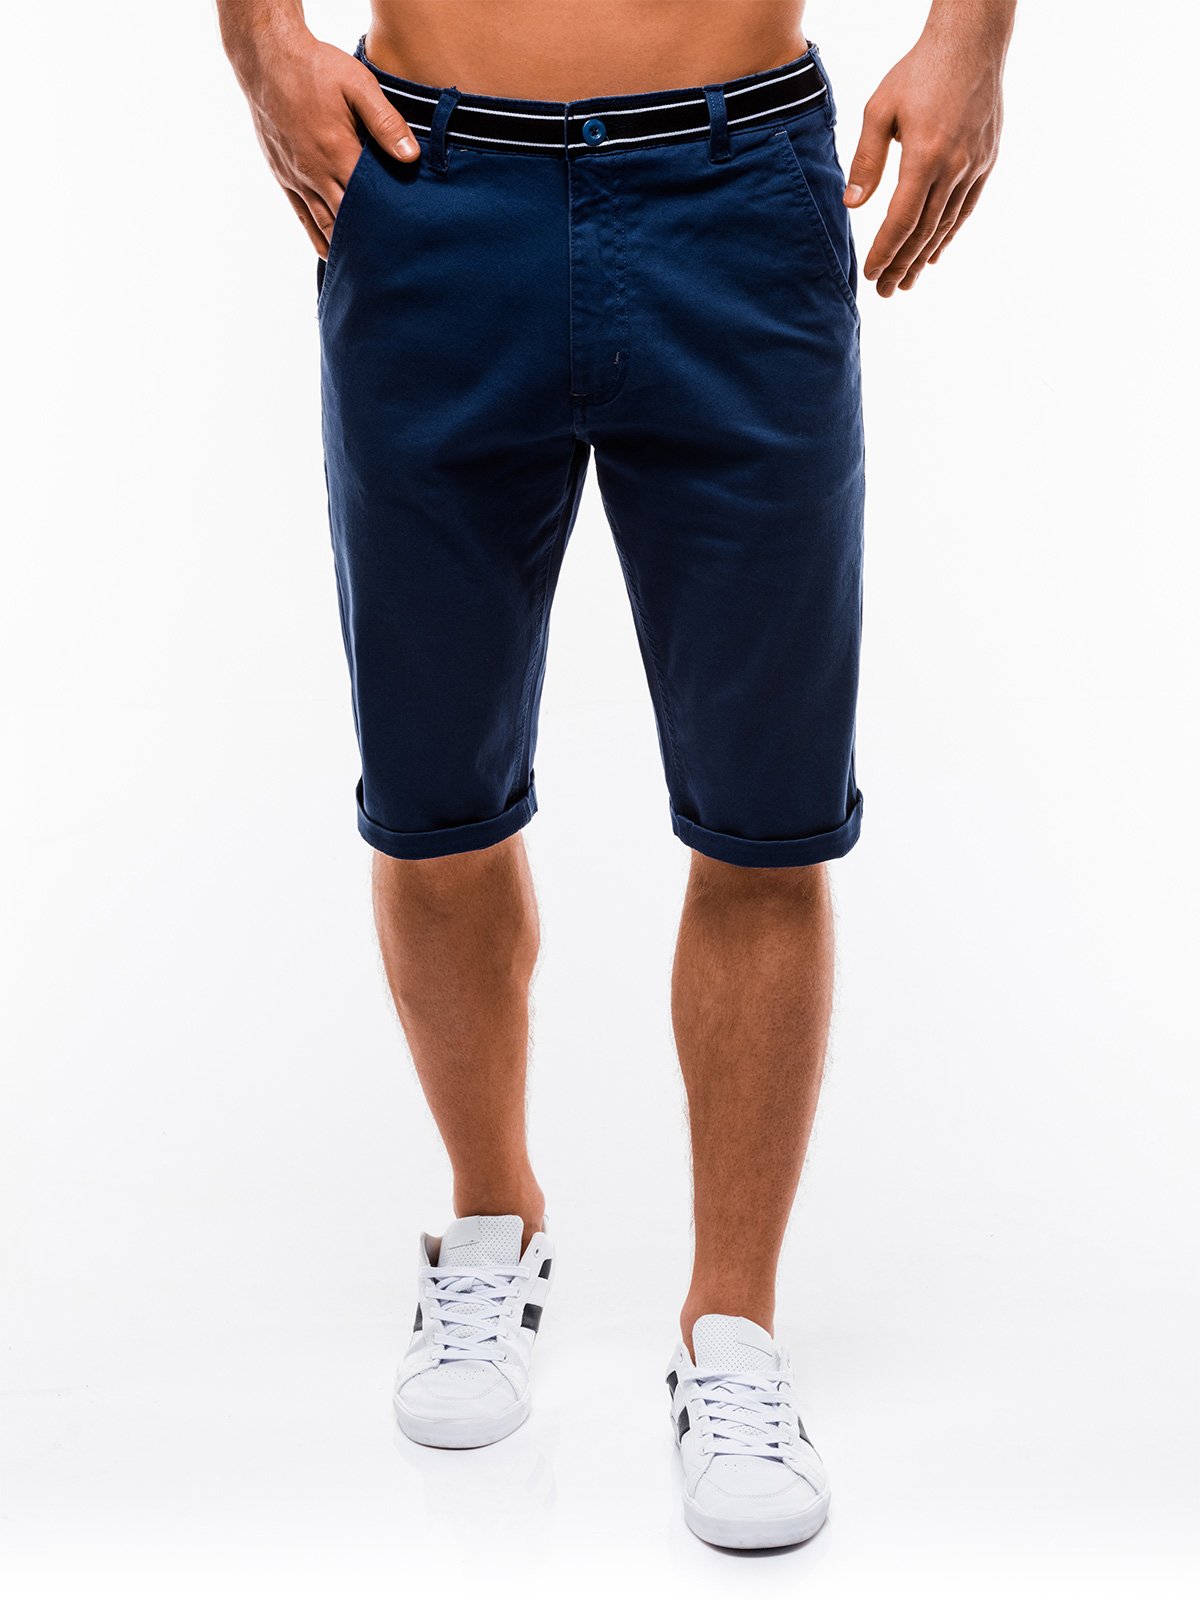 Men's bermuda shorts P402 - blue | MODONE wholesale - Clothing For Men